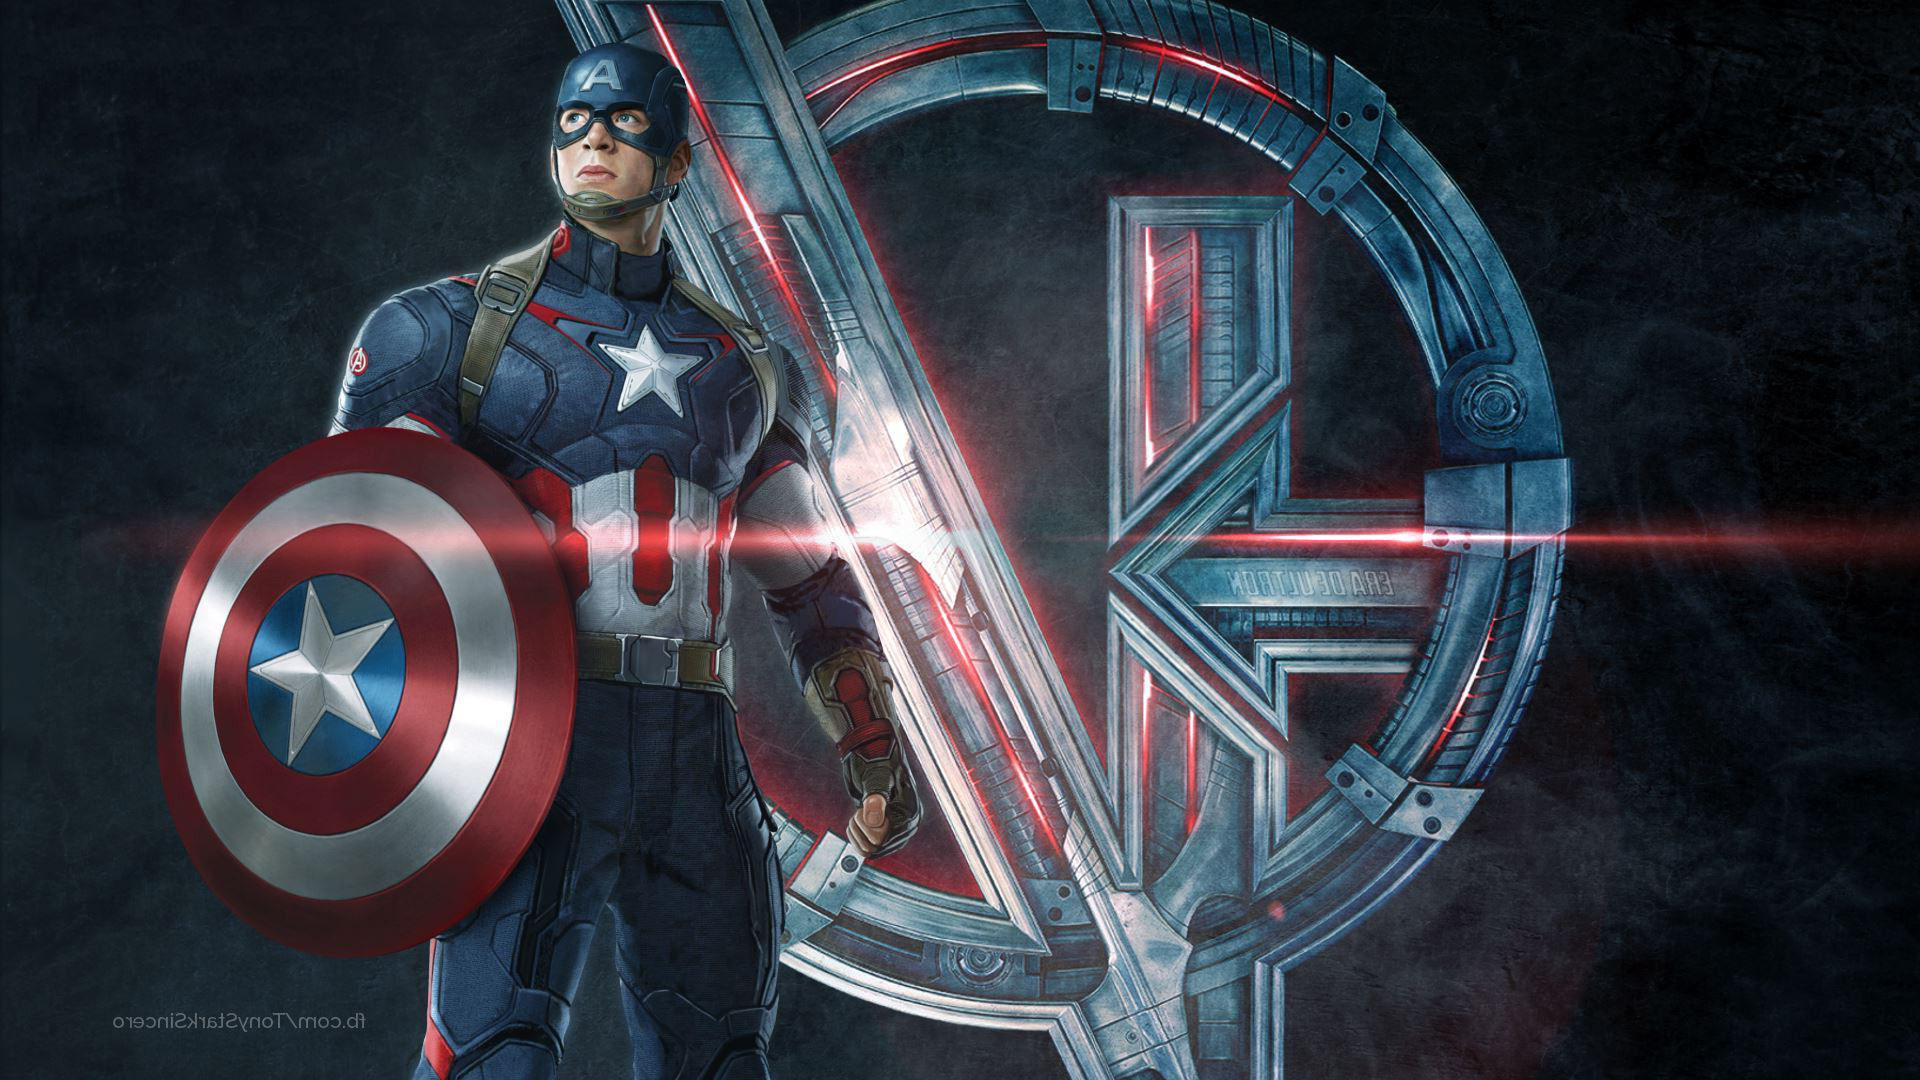 The Avengers, Avengers: Age Of Ultron, Superhero, Symbols, Captain America, Steve Rogers, Chris Evans, Shields, Movies, Concept Art Wallpaper